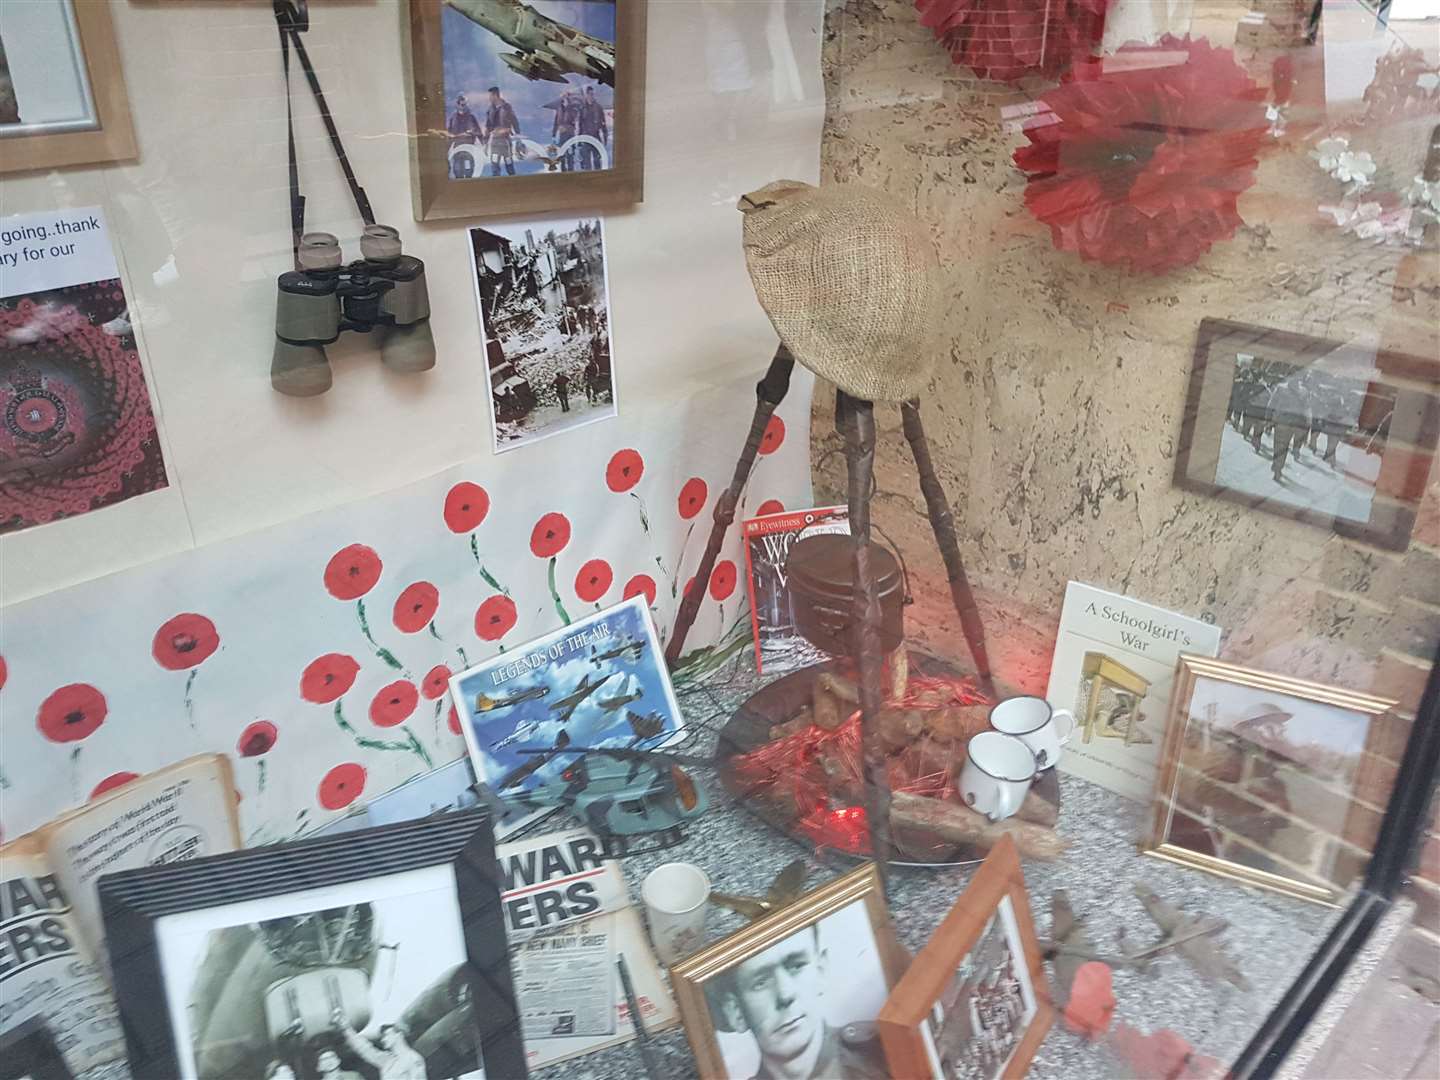 The YMCA has borrowed memorabilia belonging to World War veterans for the temporary shopfront